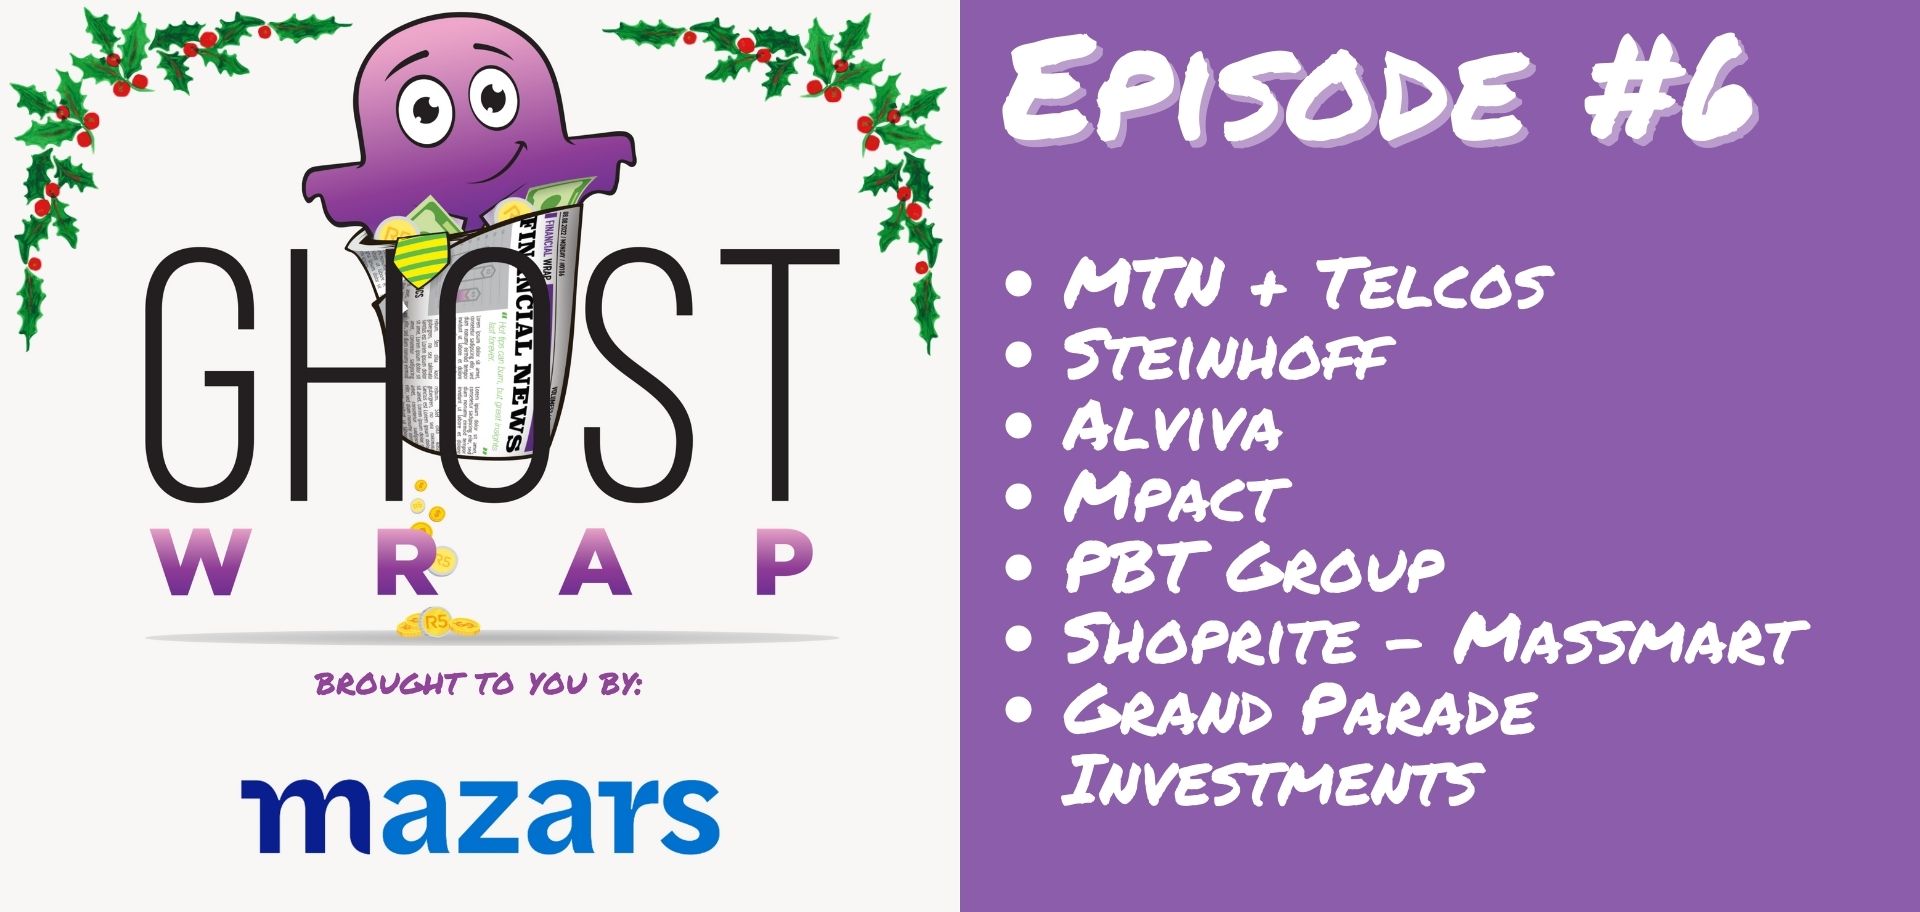 Ghost Wrap #6 (MTN + Telcos | Steinhoff | Alviva | Mpact | PBT Group | Shoprite – Massmart | Grand Parade)